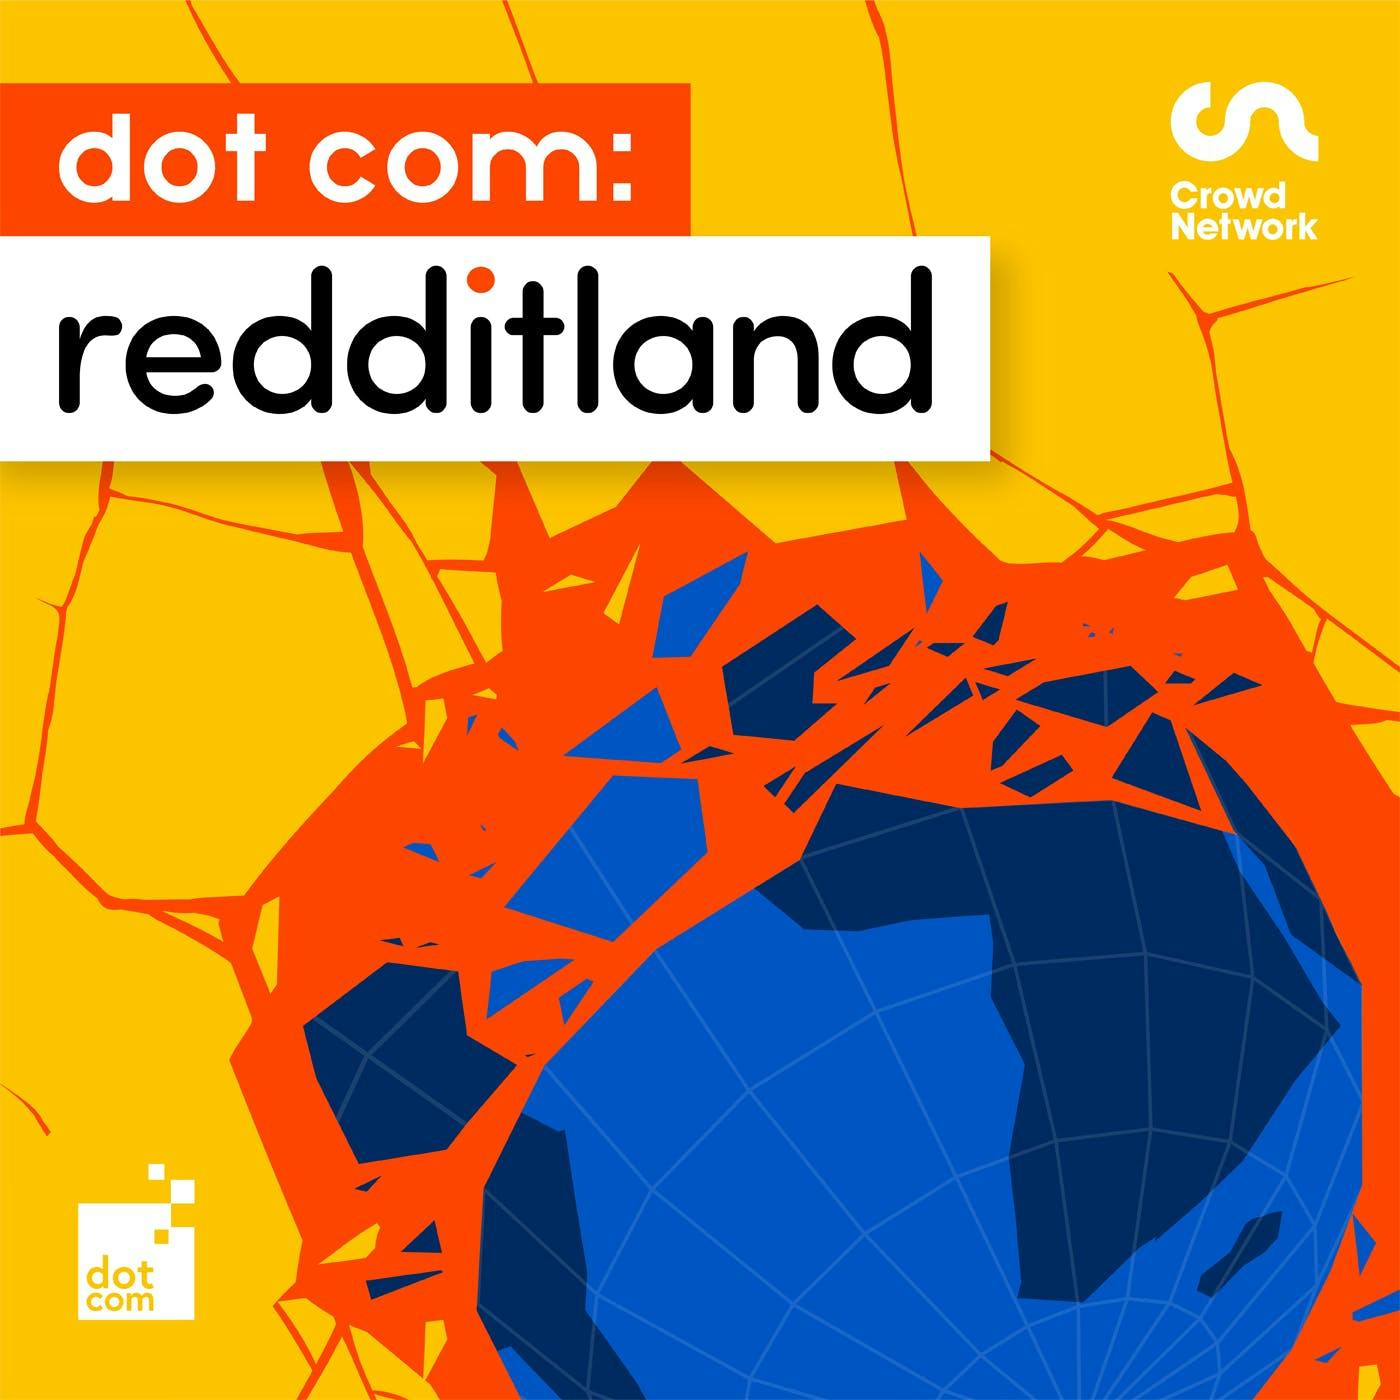 Coming soon: Redditland